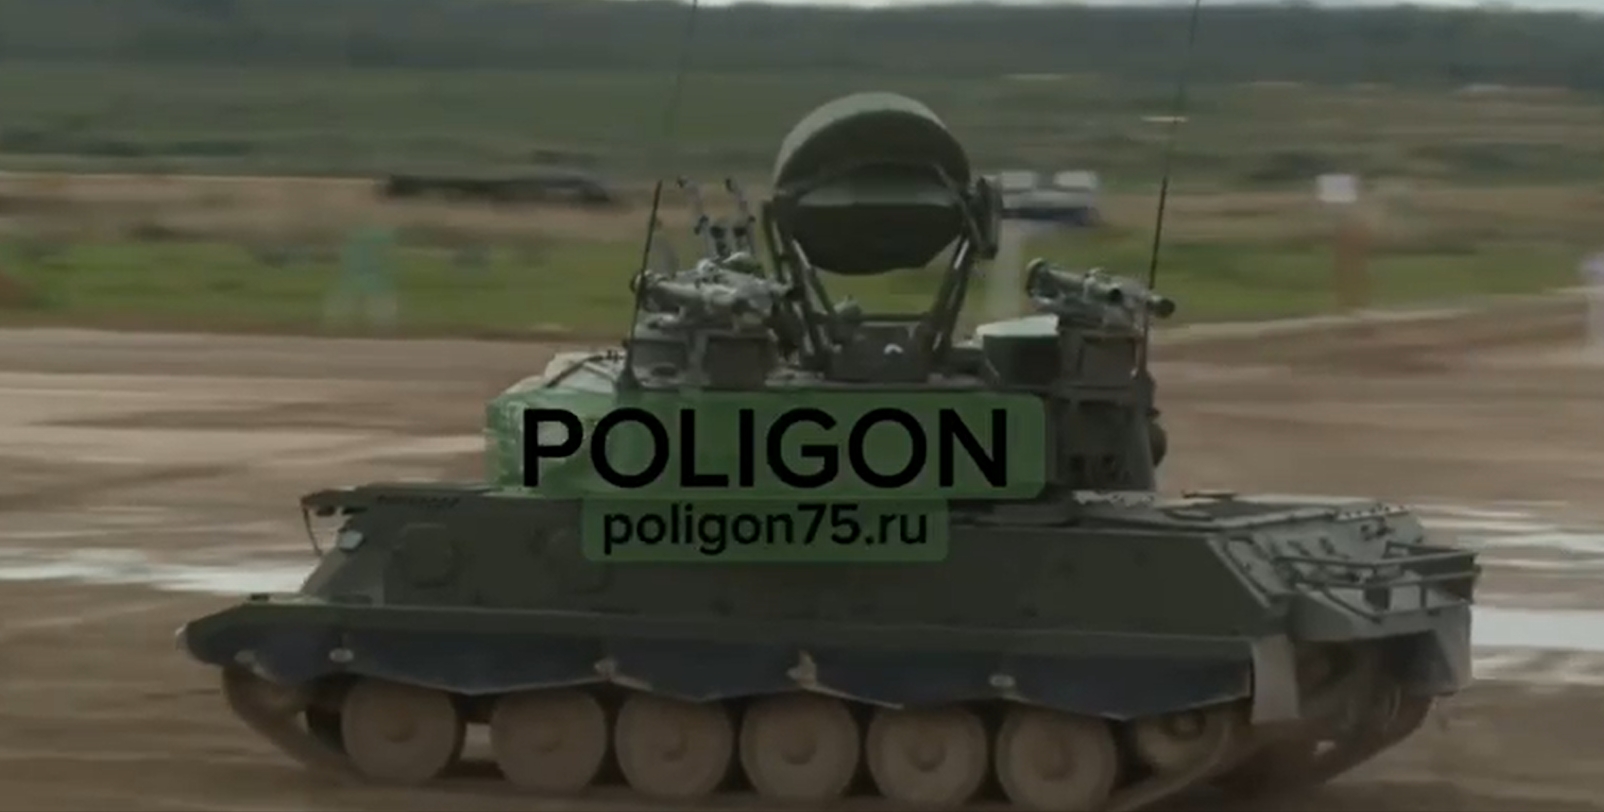 Полигон- армейский магазин